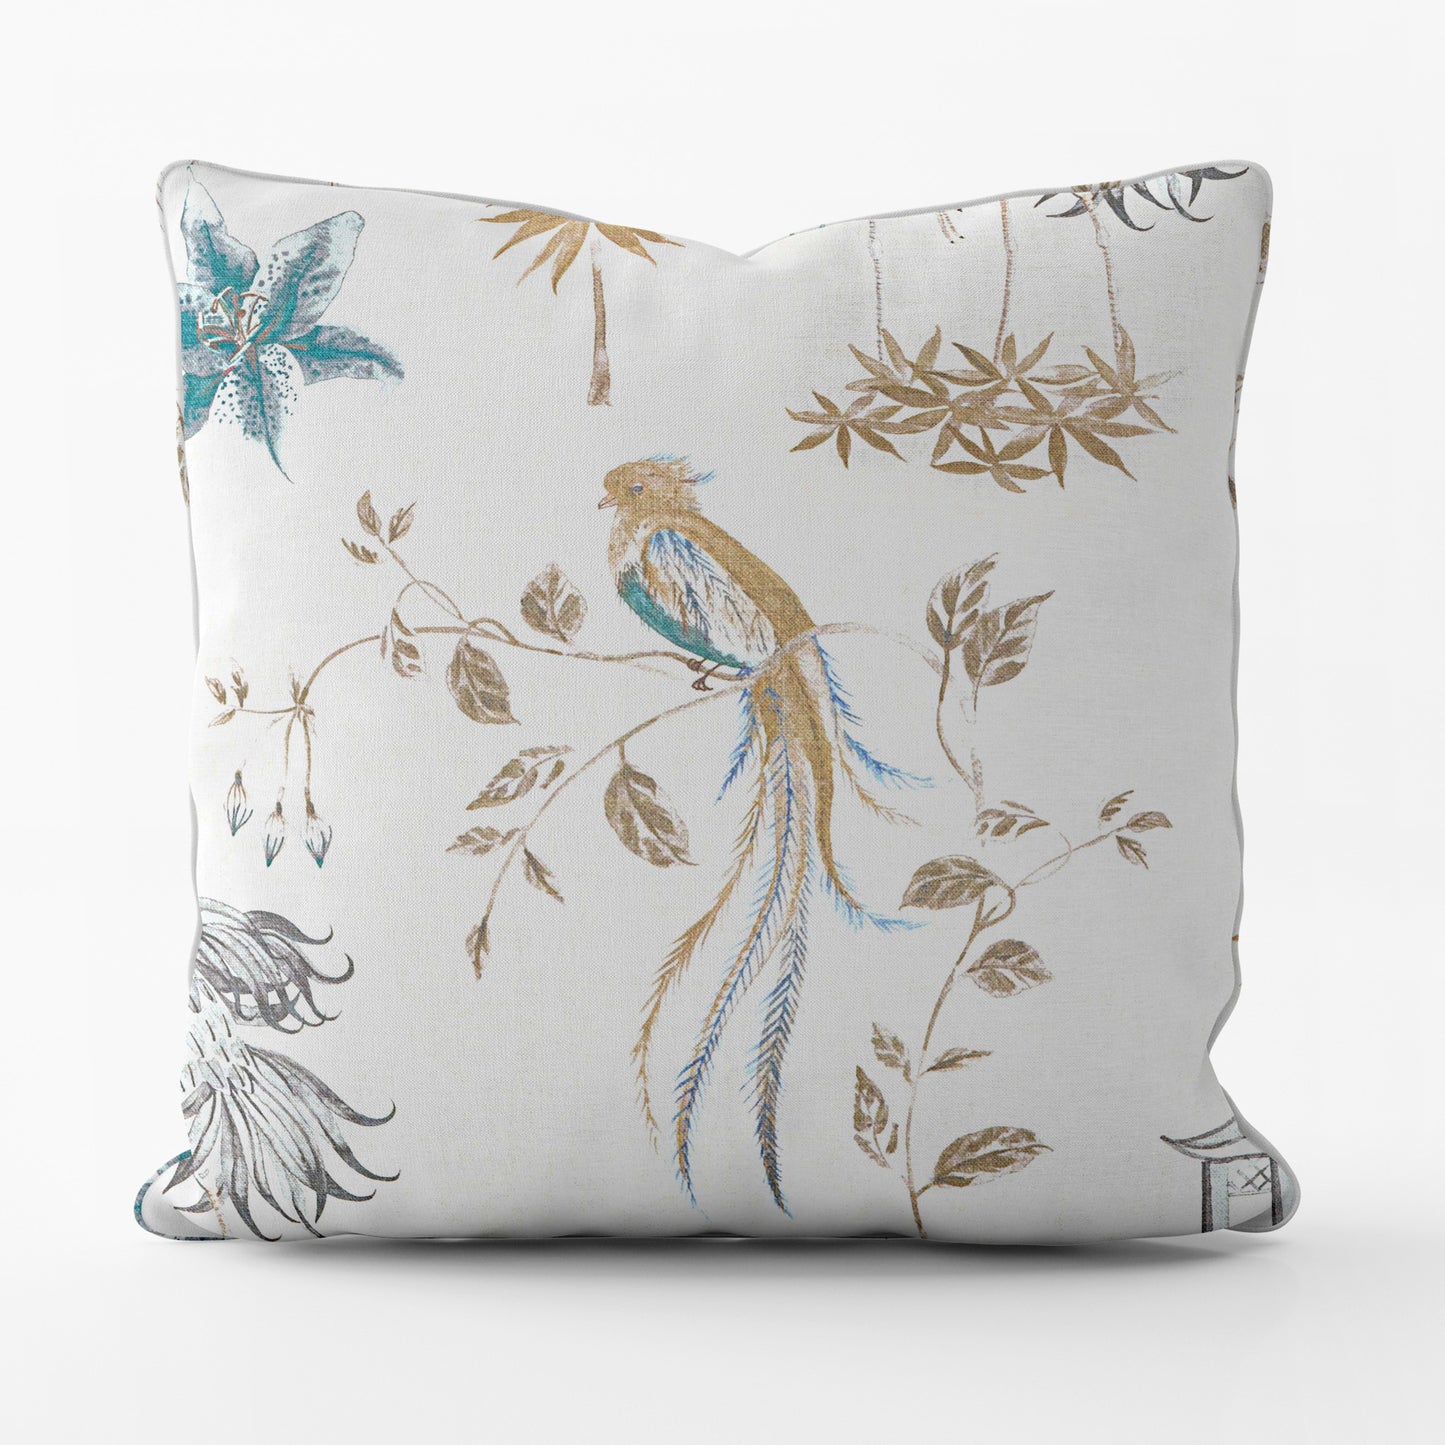 Decorative Pillows in Let It Crane Aegean Blue Oriental Toile, Multicolor Chinoiserie